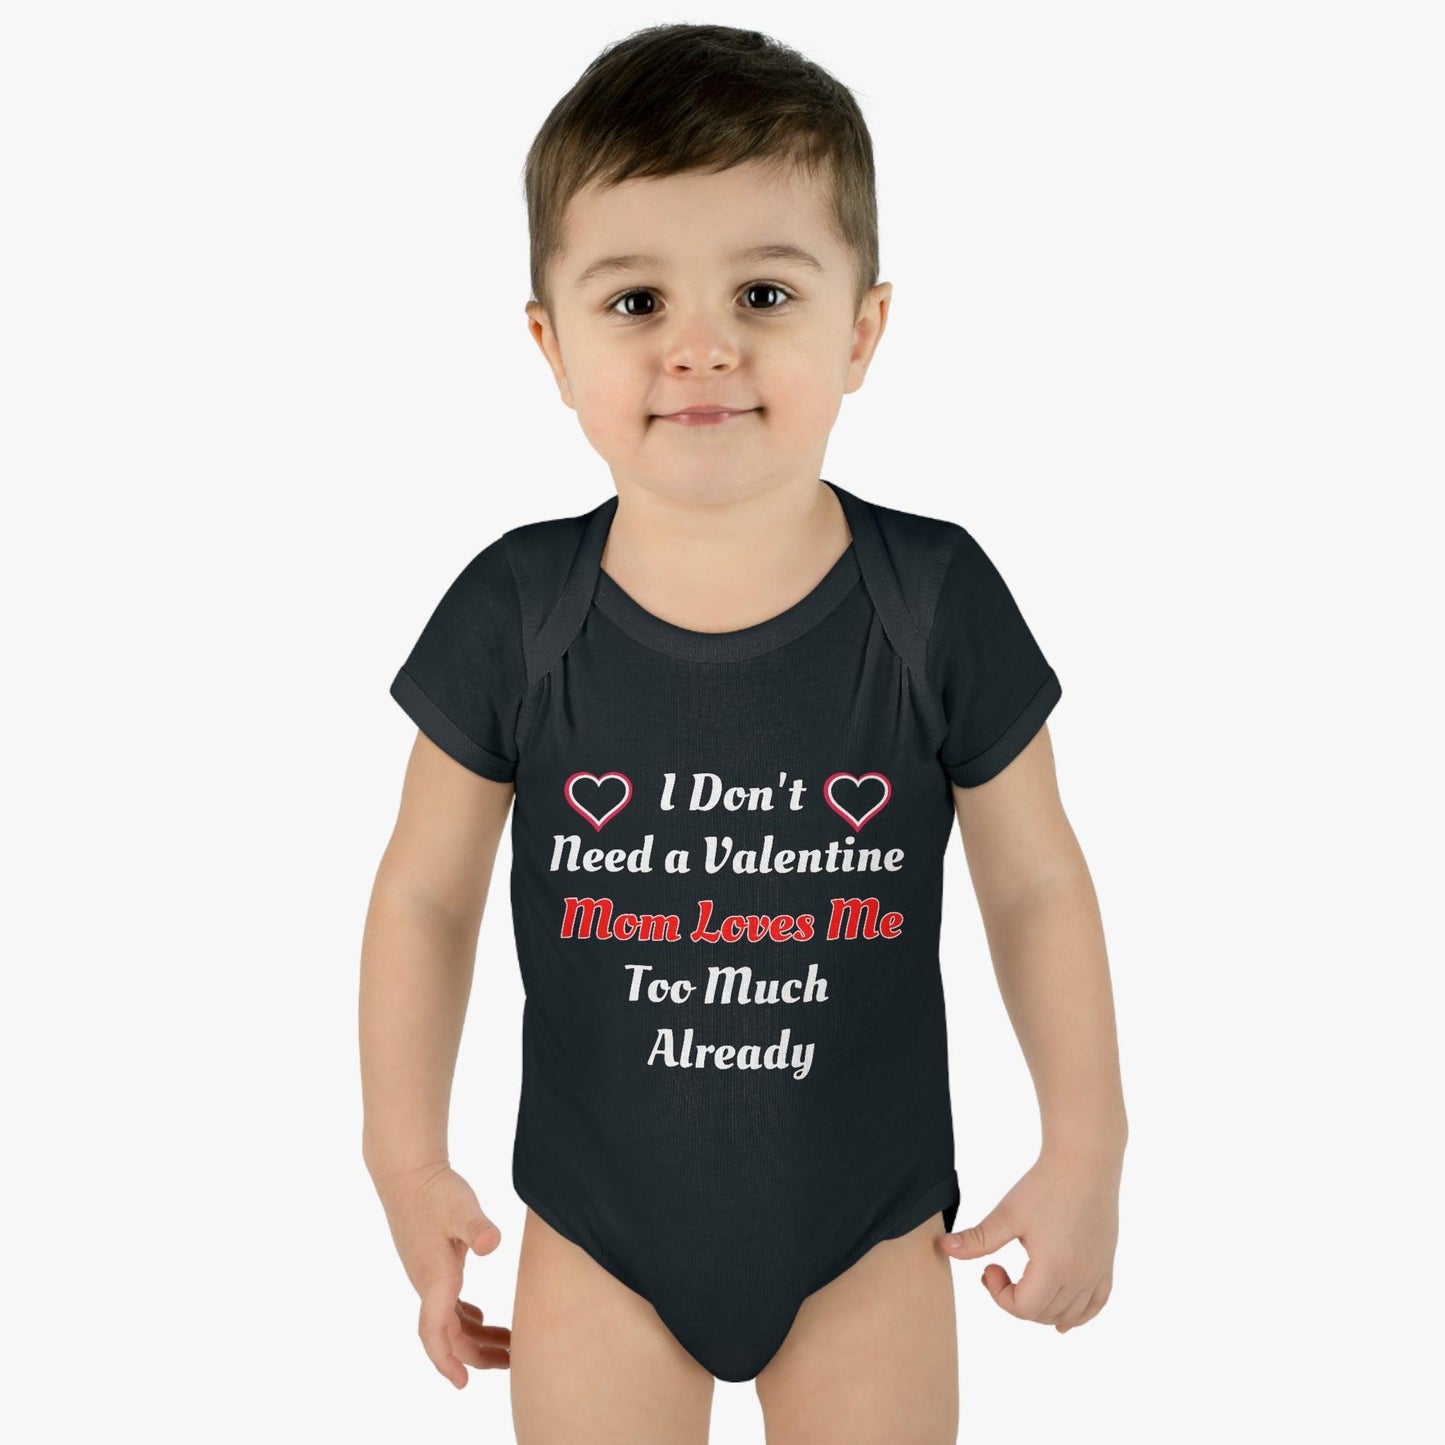 I don't need a valentine